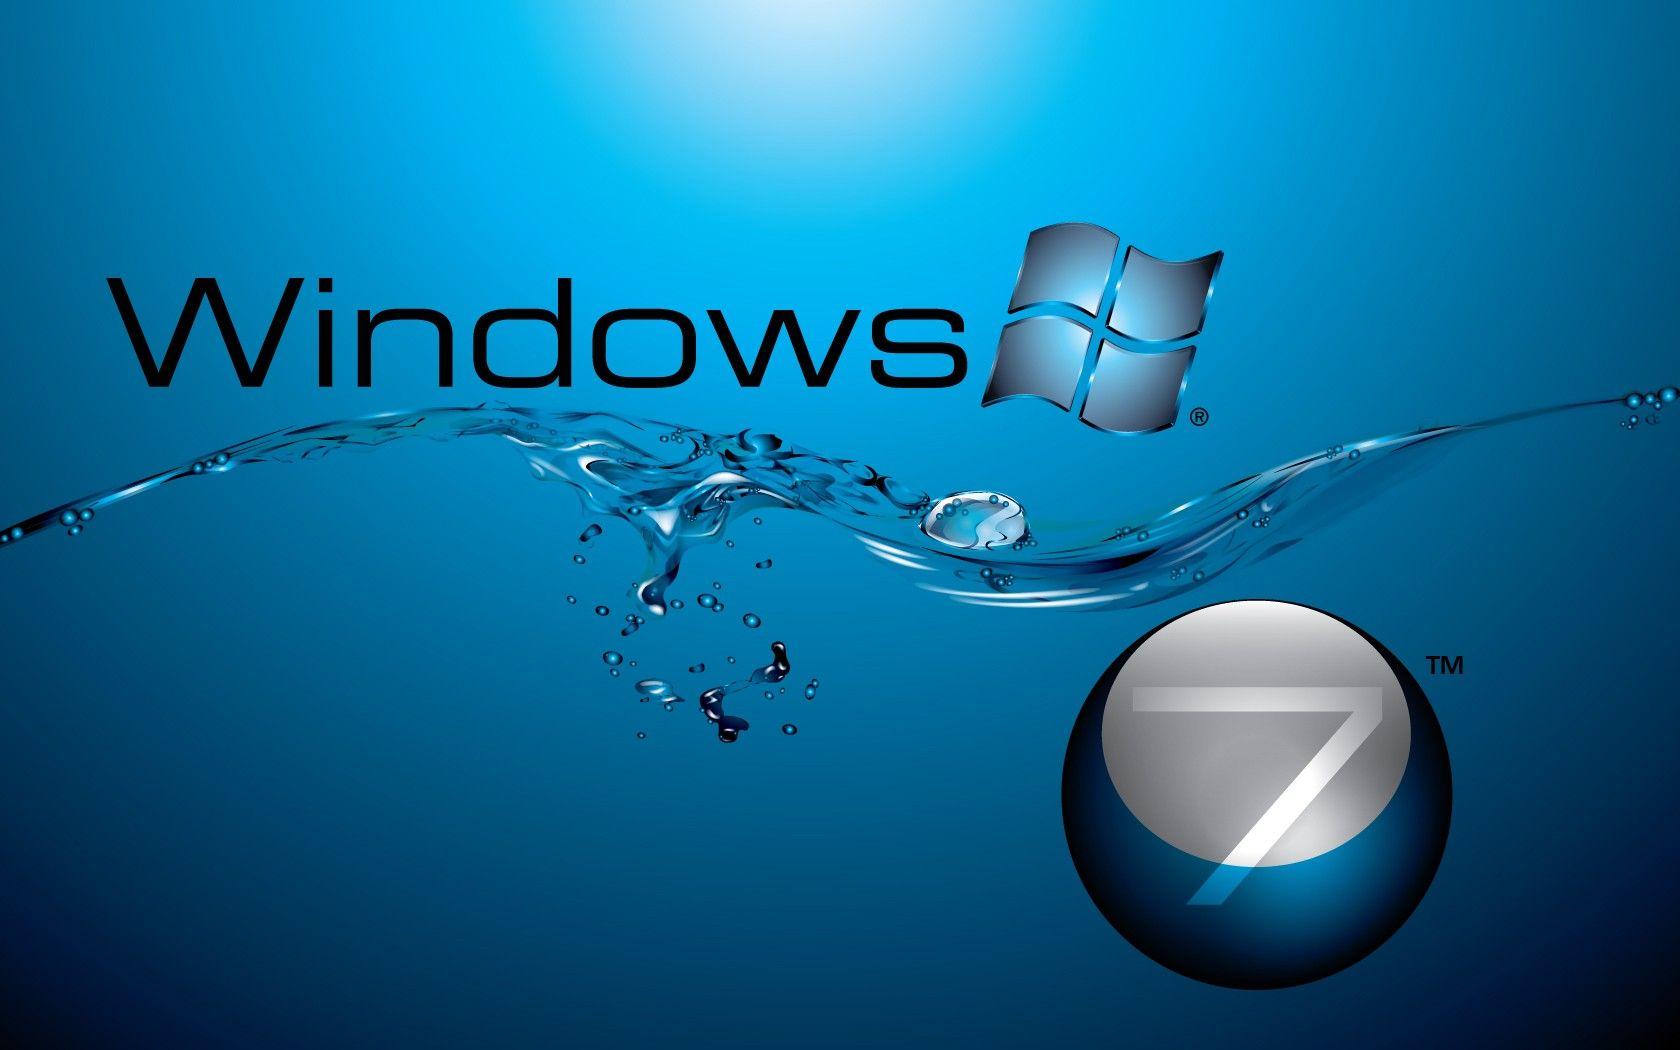 Windows 8 HD Wallpaper Free Download